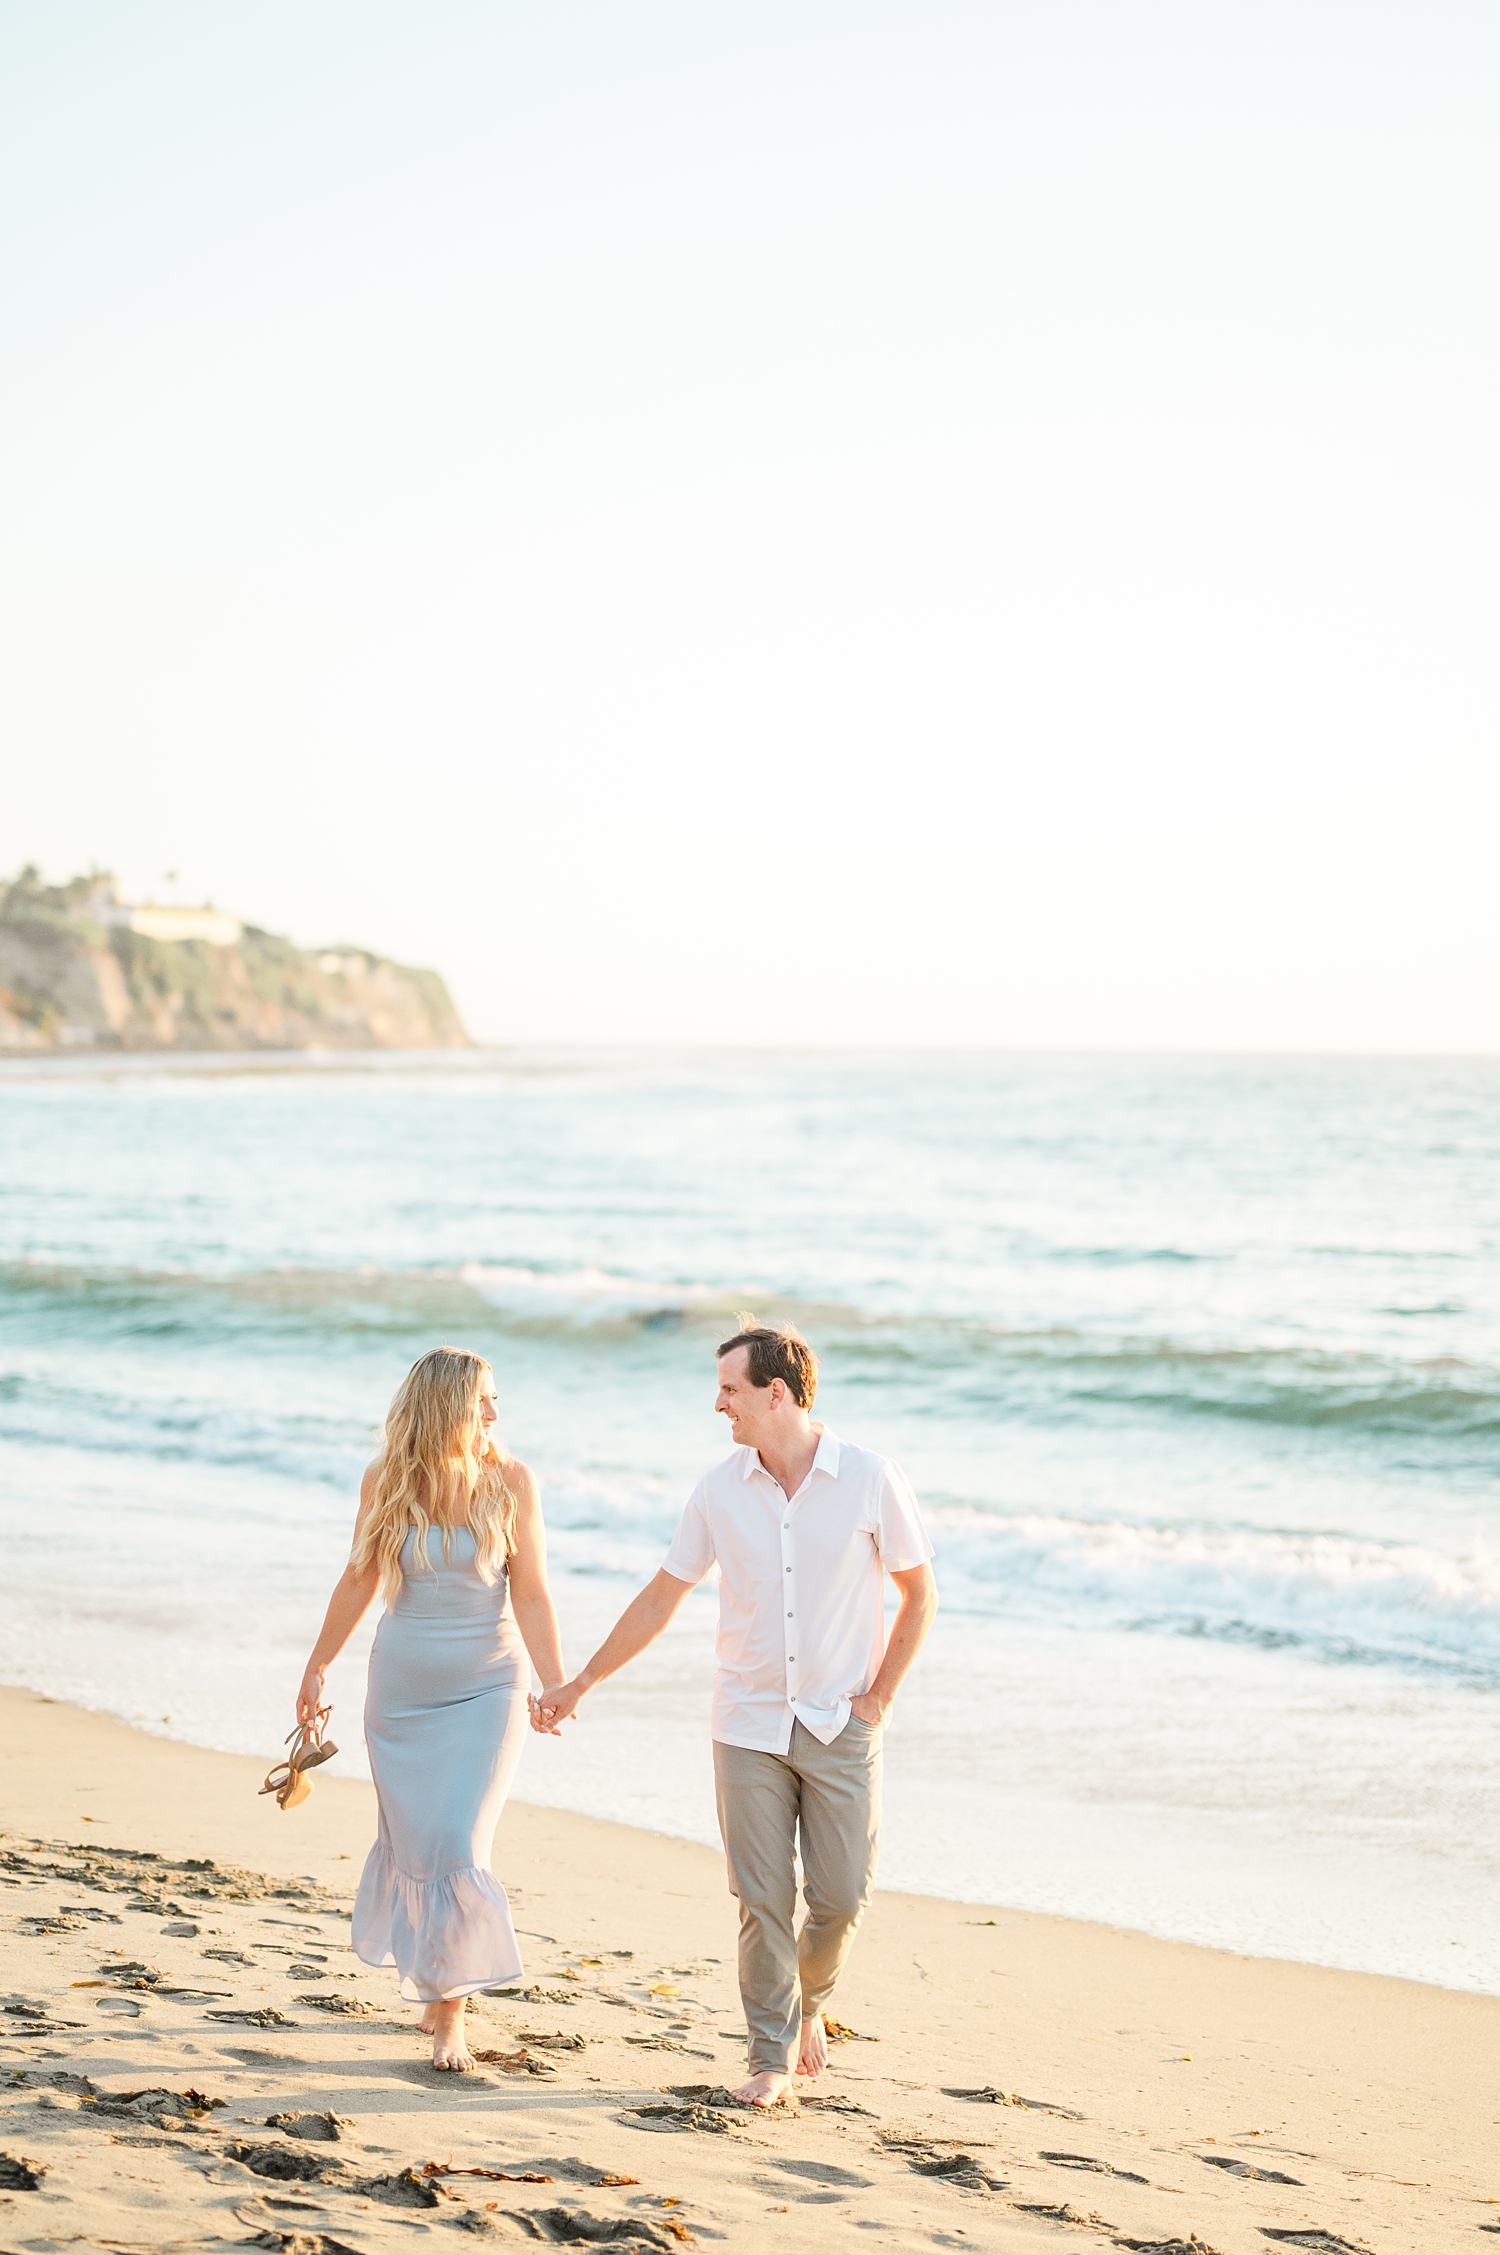 Nataly Hernandez Photography | Palos Verdes Estates Engagement Session | Romantic | Beach | Sunset | Film | Editorial | Fine Art Wedding Photographer -78.jpg